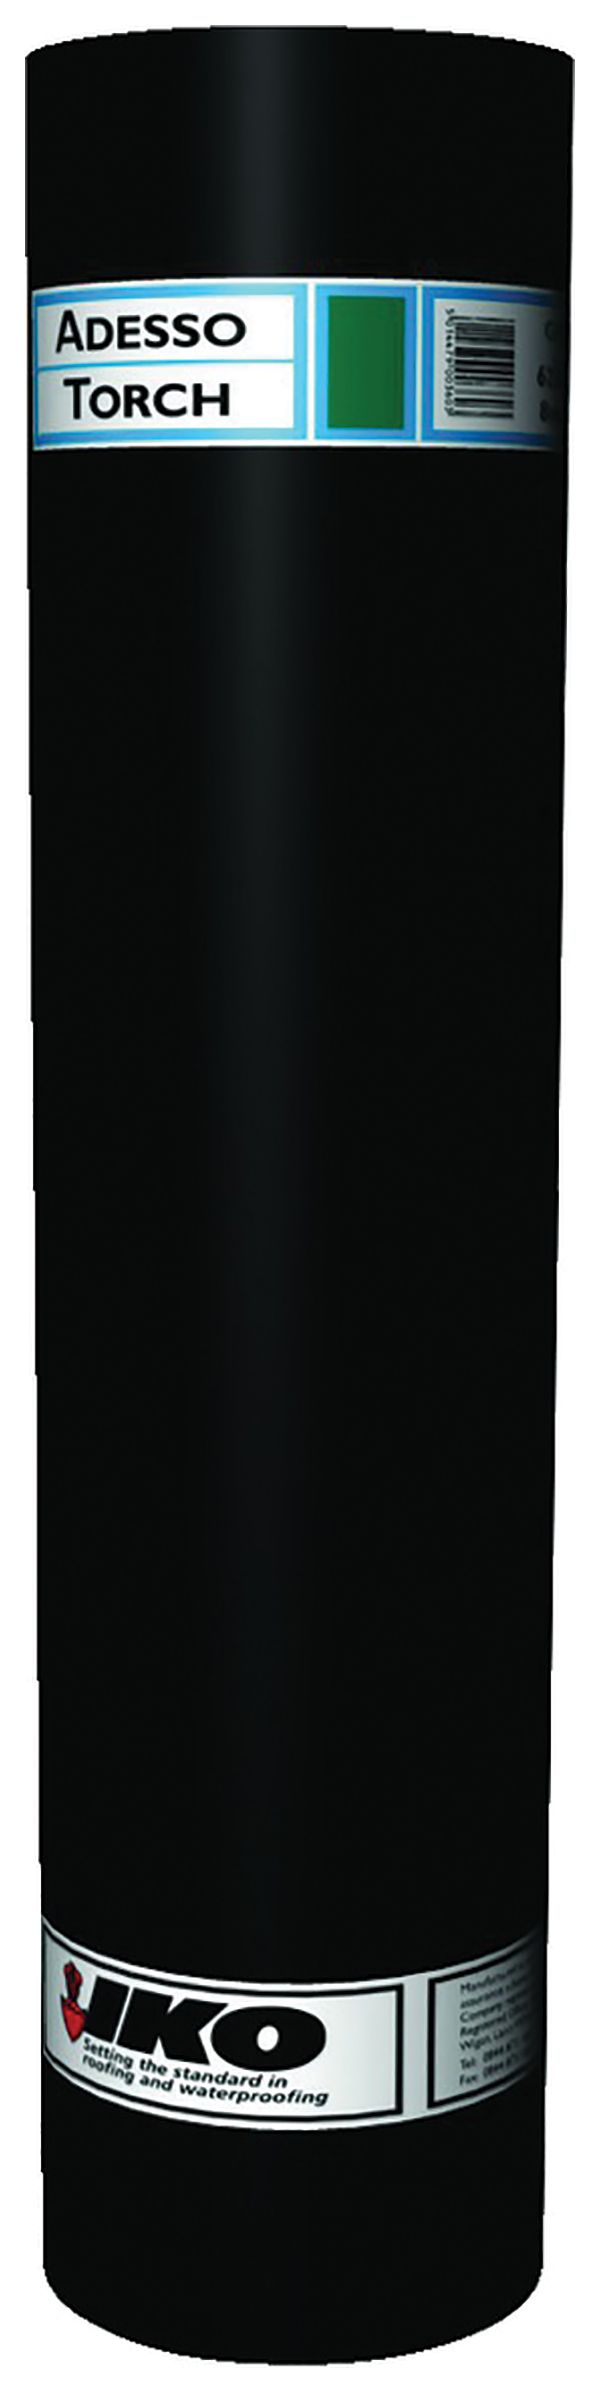 Image of IKO Adesso Torch Green Capsheet - 8 x 1m